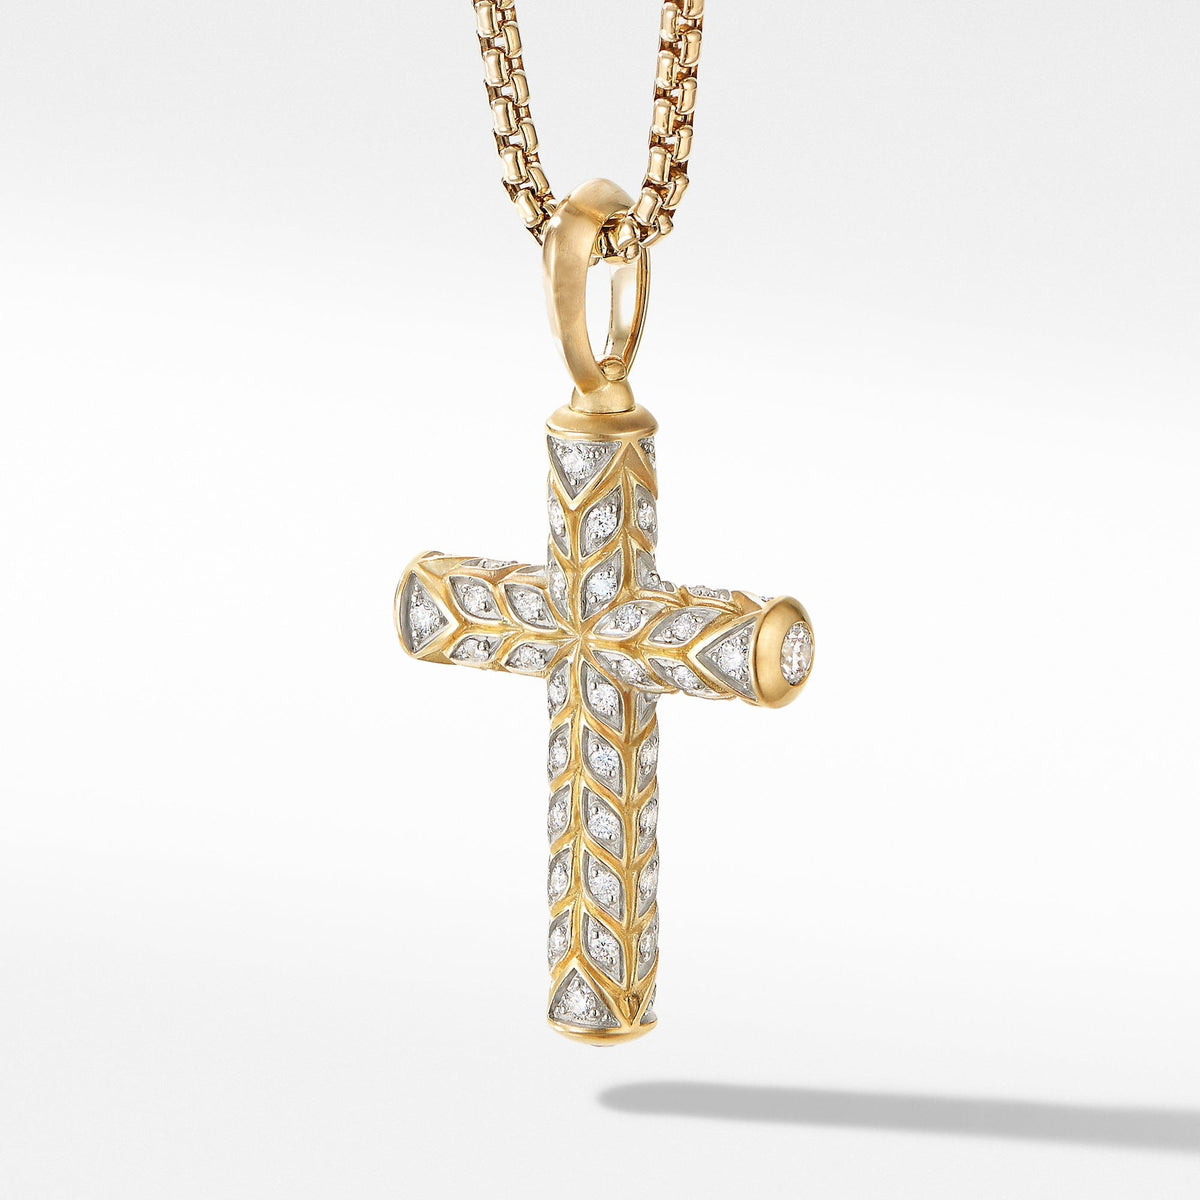 Chevron Sculpted Cross Pendant in 18K Yellow Gold with Pavé Diamonds